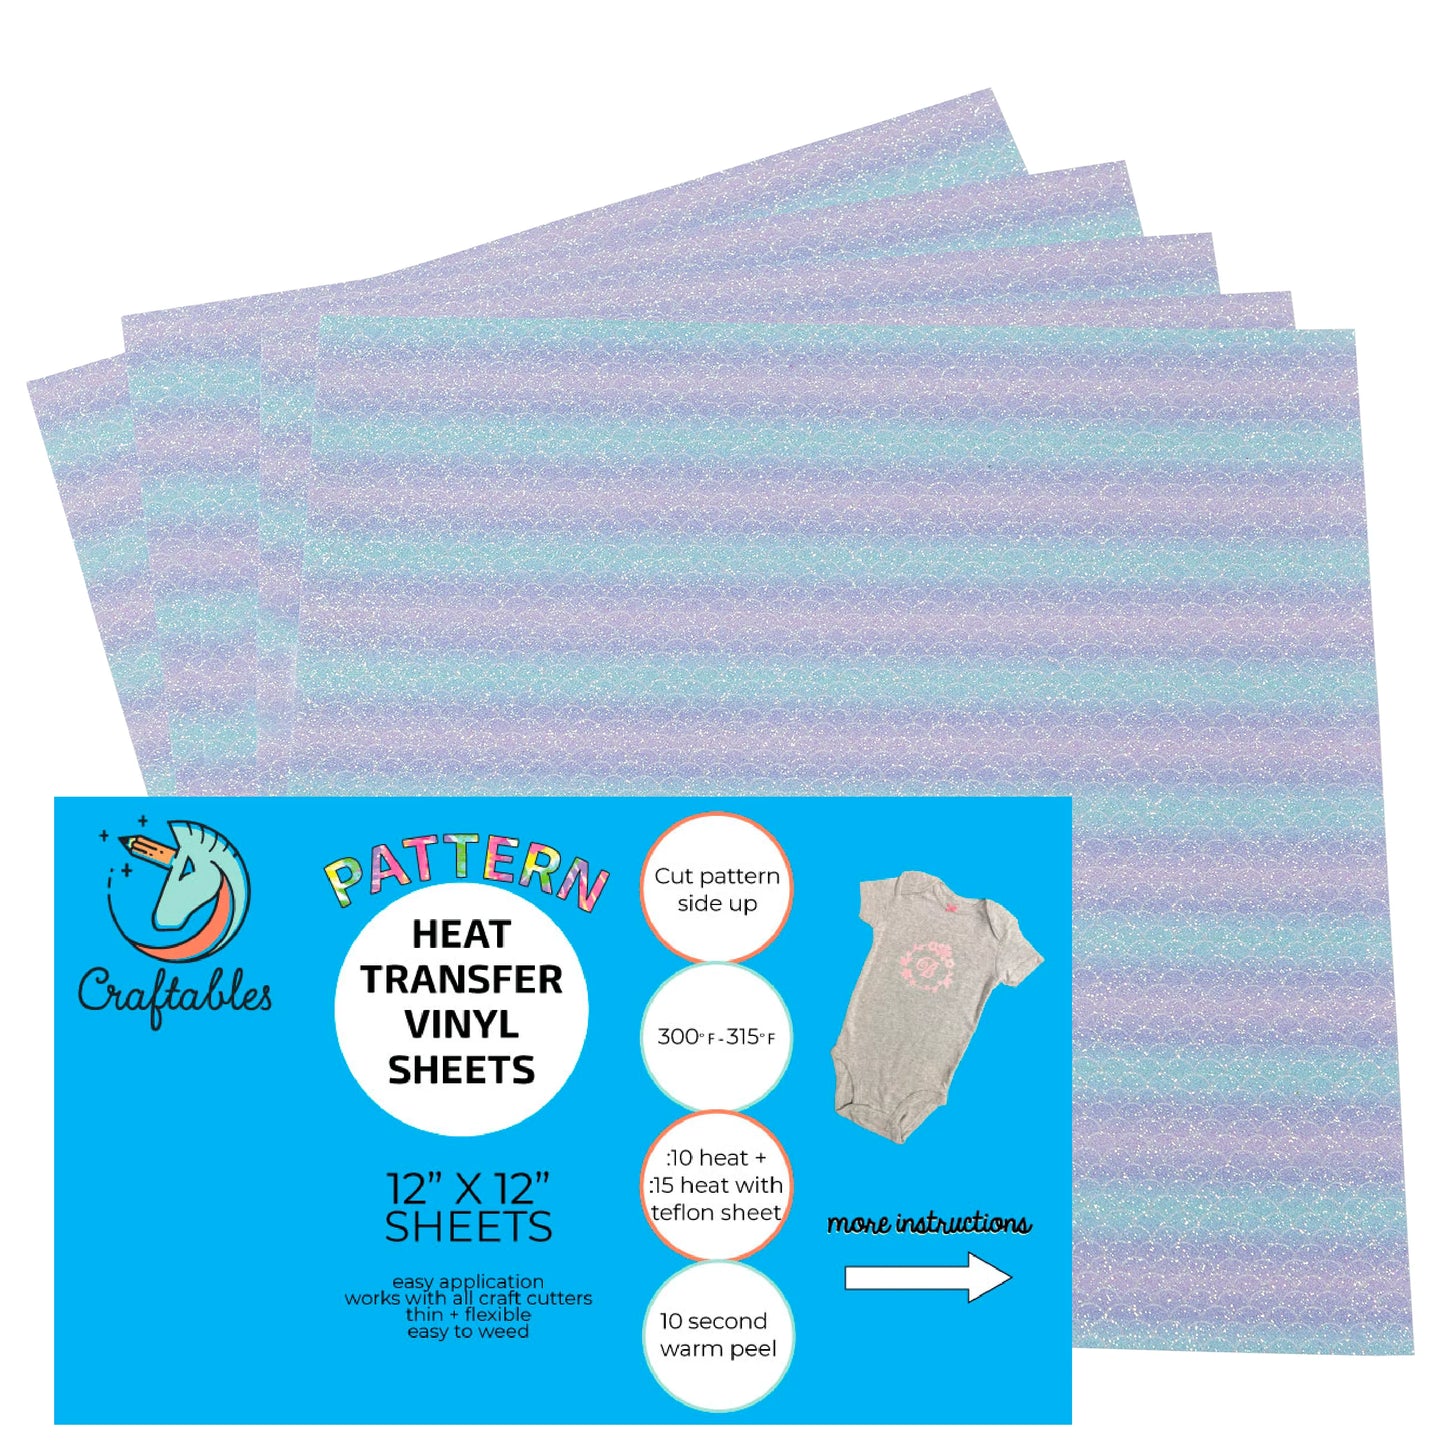 Mermaid Printed Glitter Pattern Heat Transfer Vinyl Sheets By Craftables